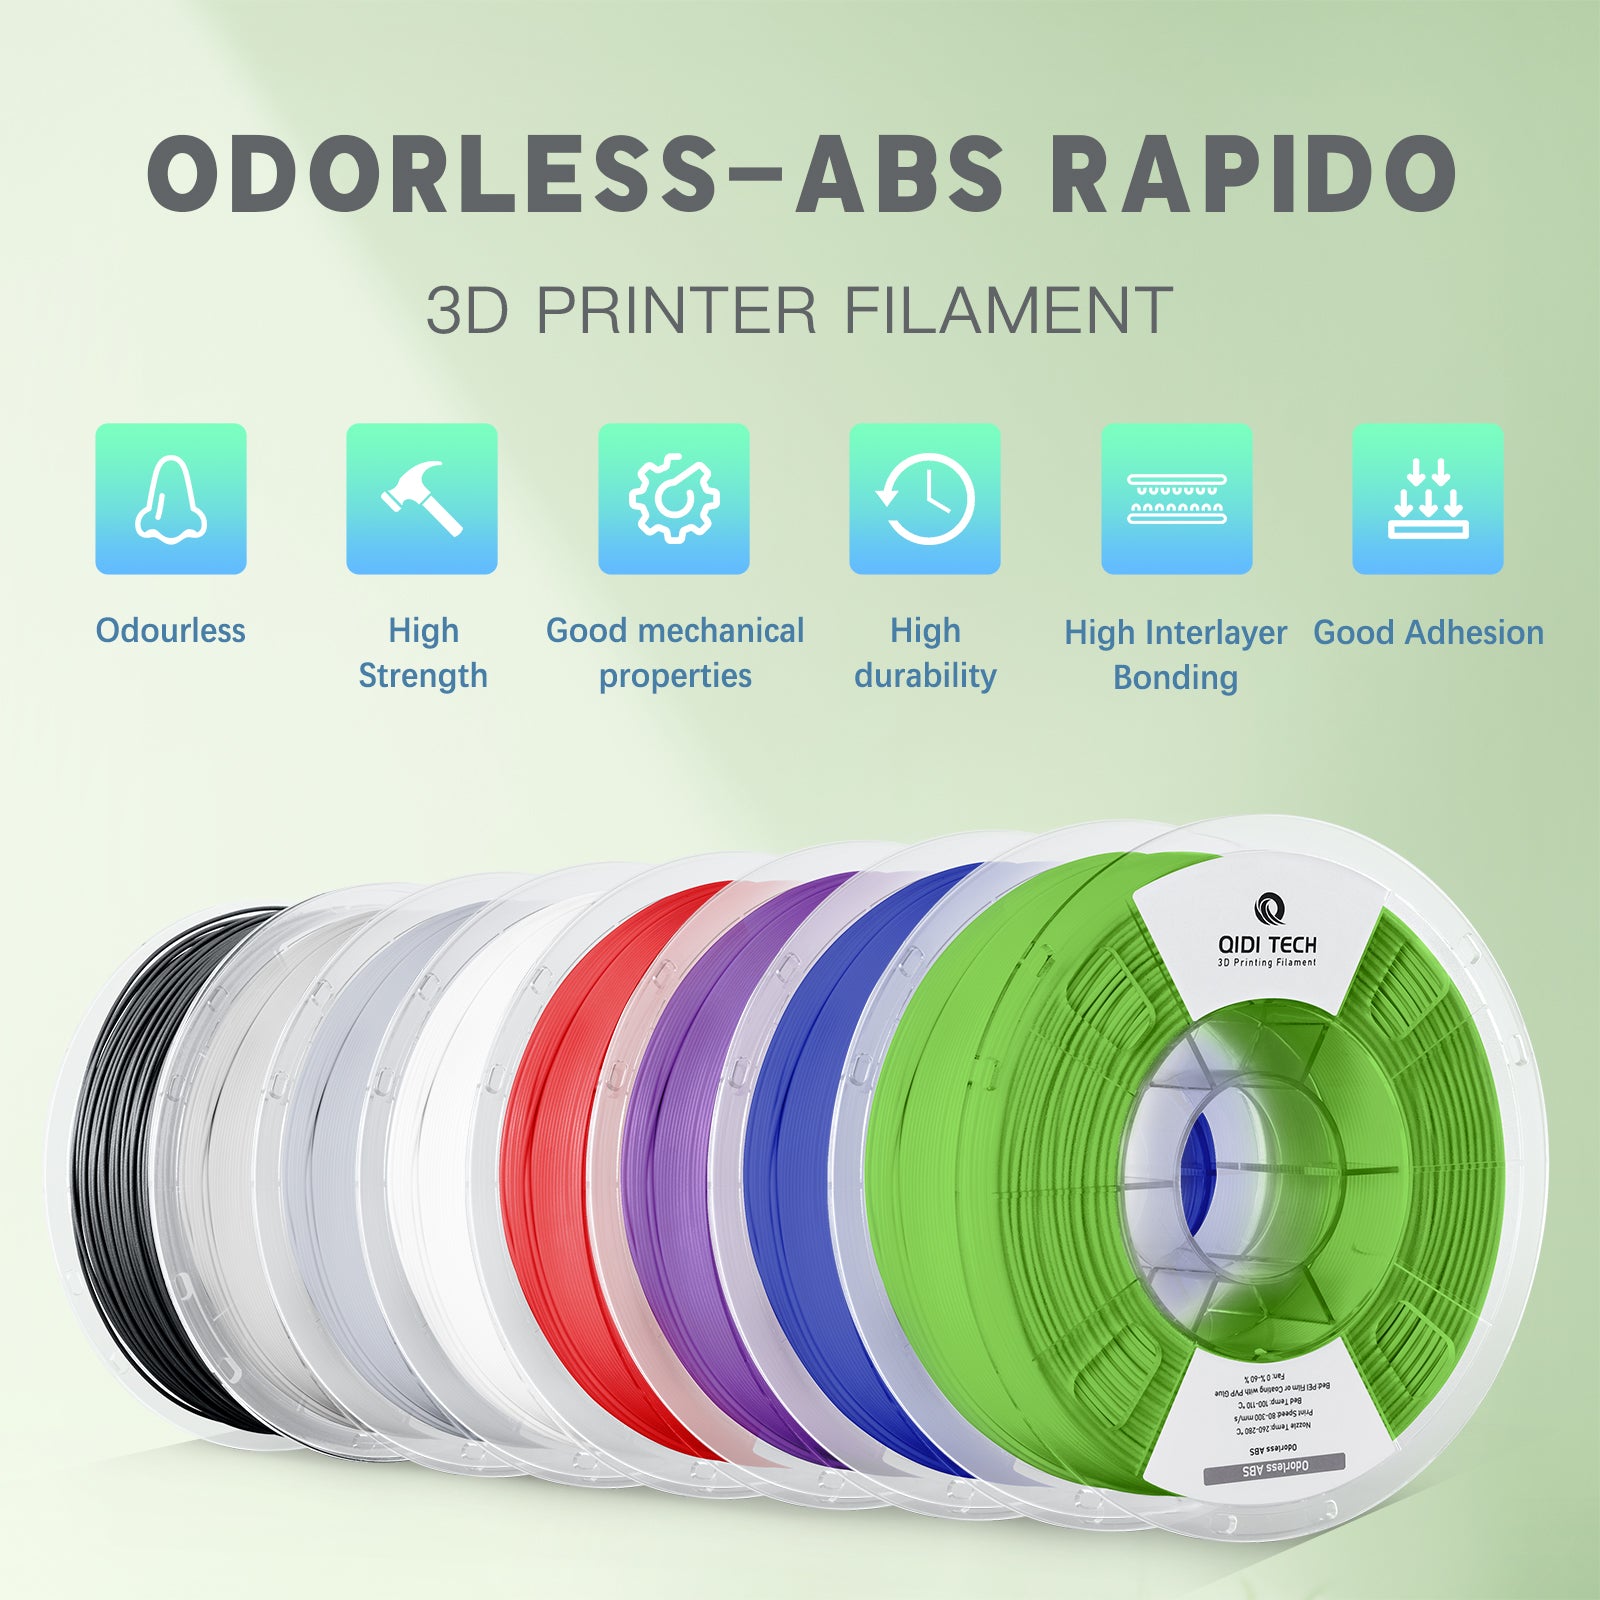 Odorless-ABS Rapido Filament